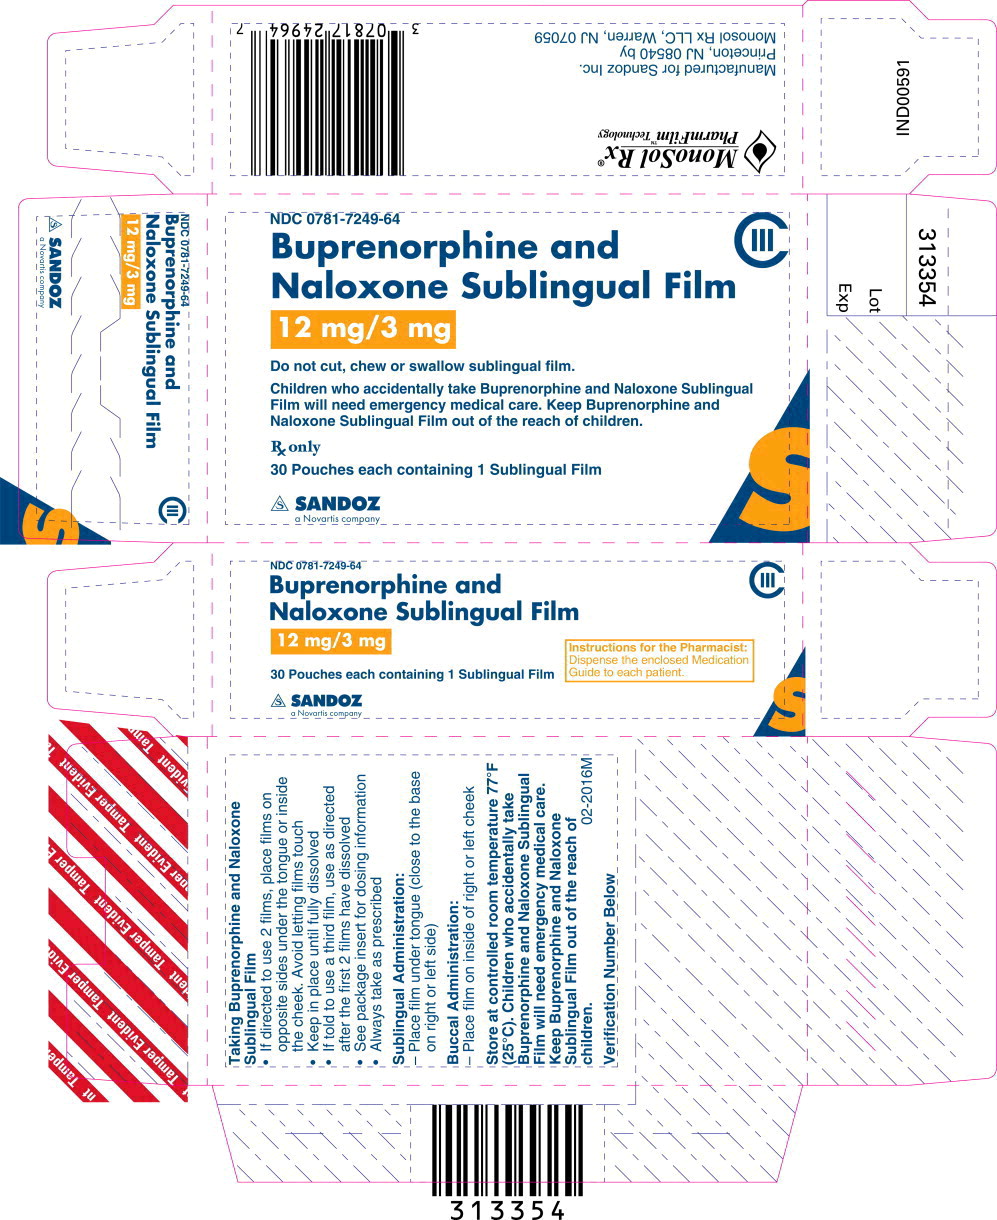 Principal Display Panel - Buprenorphine and Naloxone Sublingual Film 12 mg/3 mg Carton Label
